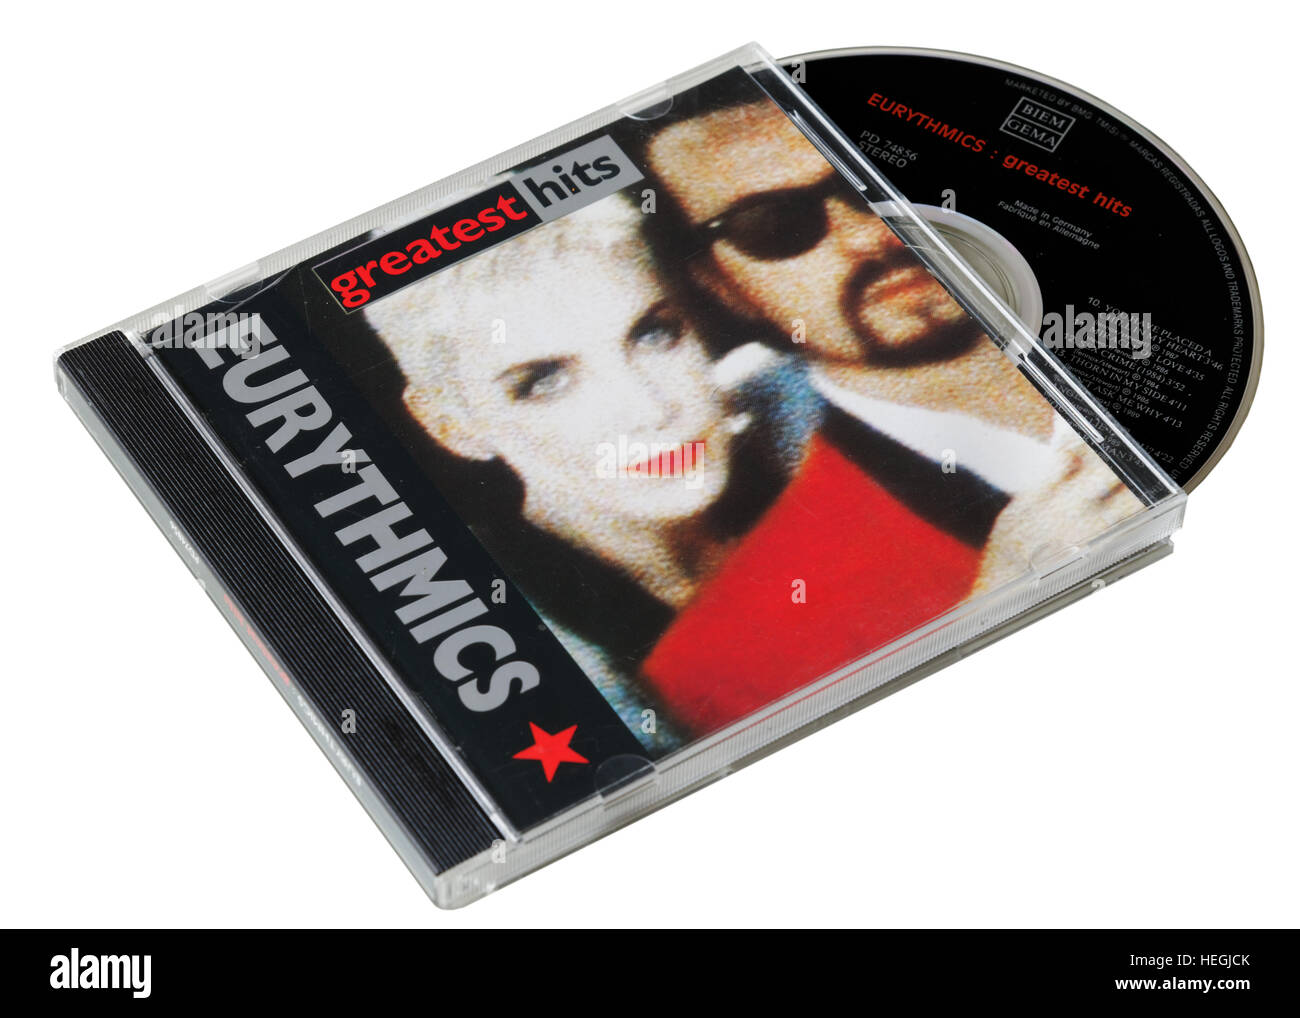 Eurythmics Greatest Hits CD Stock Photo